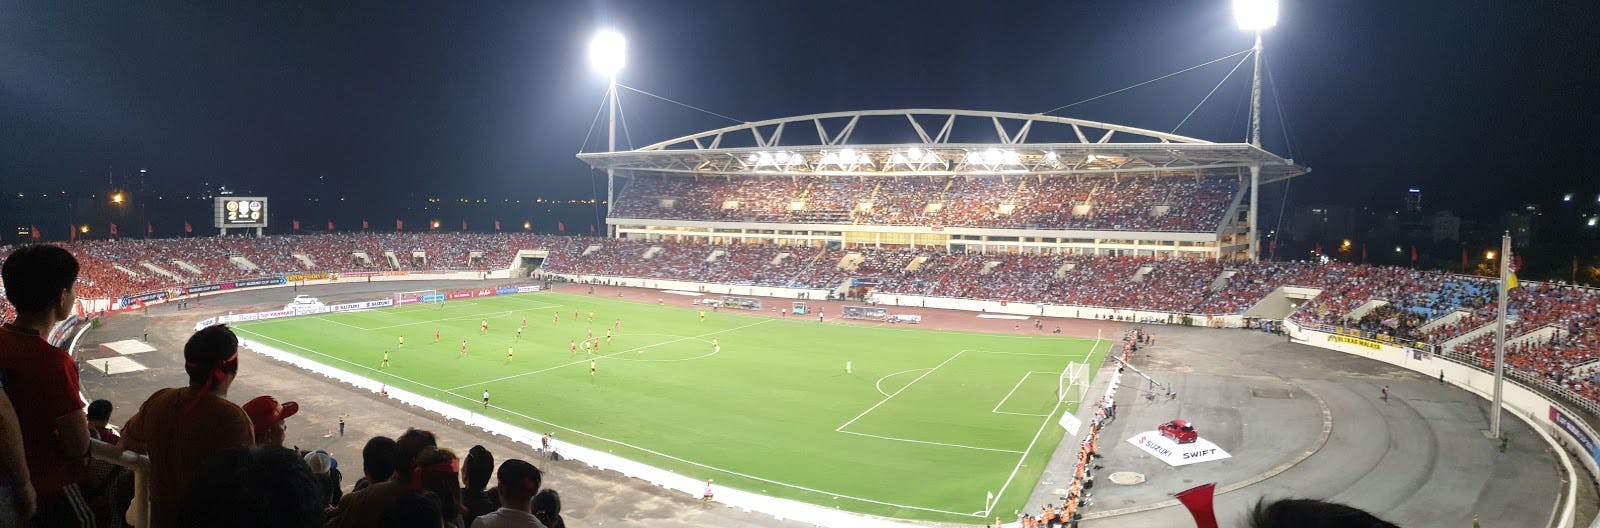 Image - My Dinh National Stadium